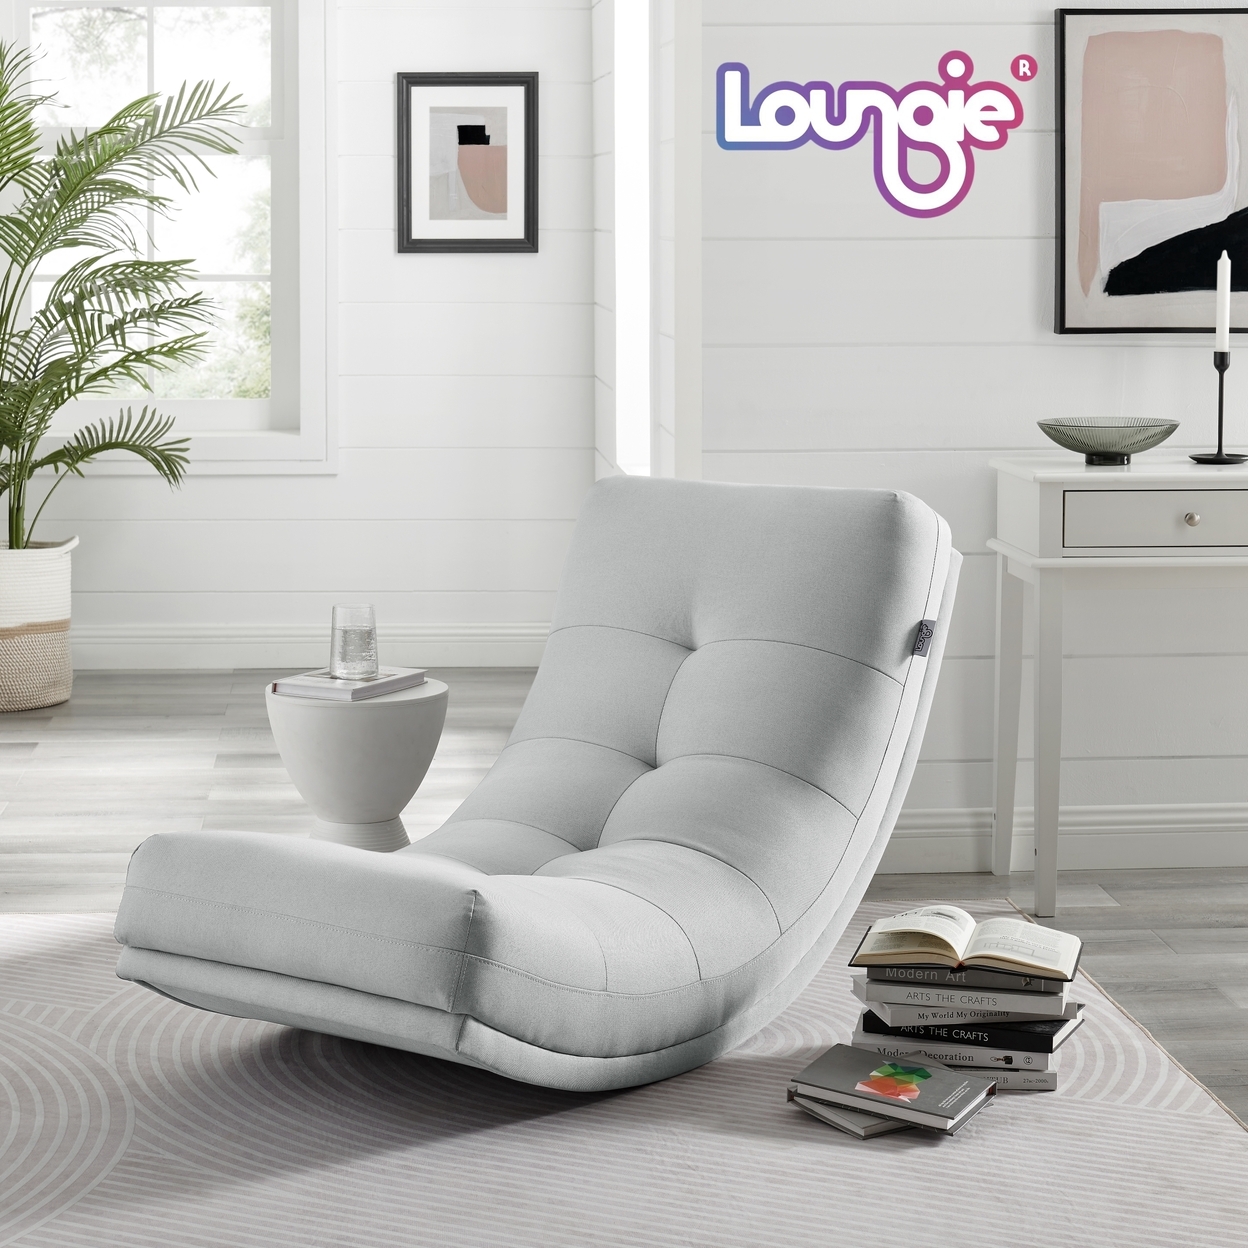 Kaniya Chair - Linen Upholstery, Tufted, Gentle Rocking Design, Ergonomic Shape And Padded Seat - Beige